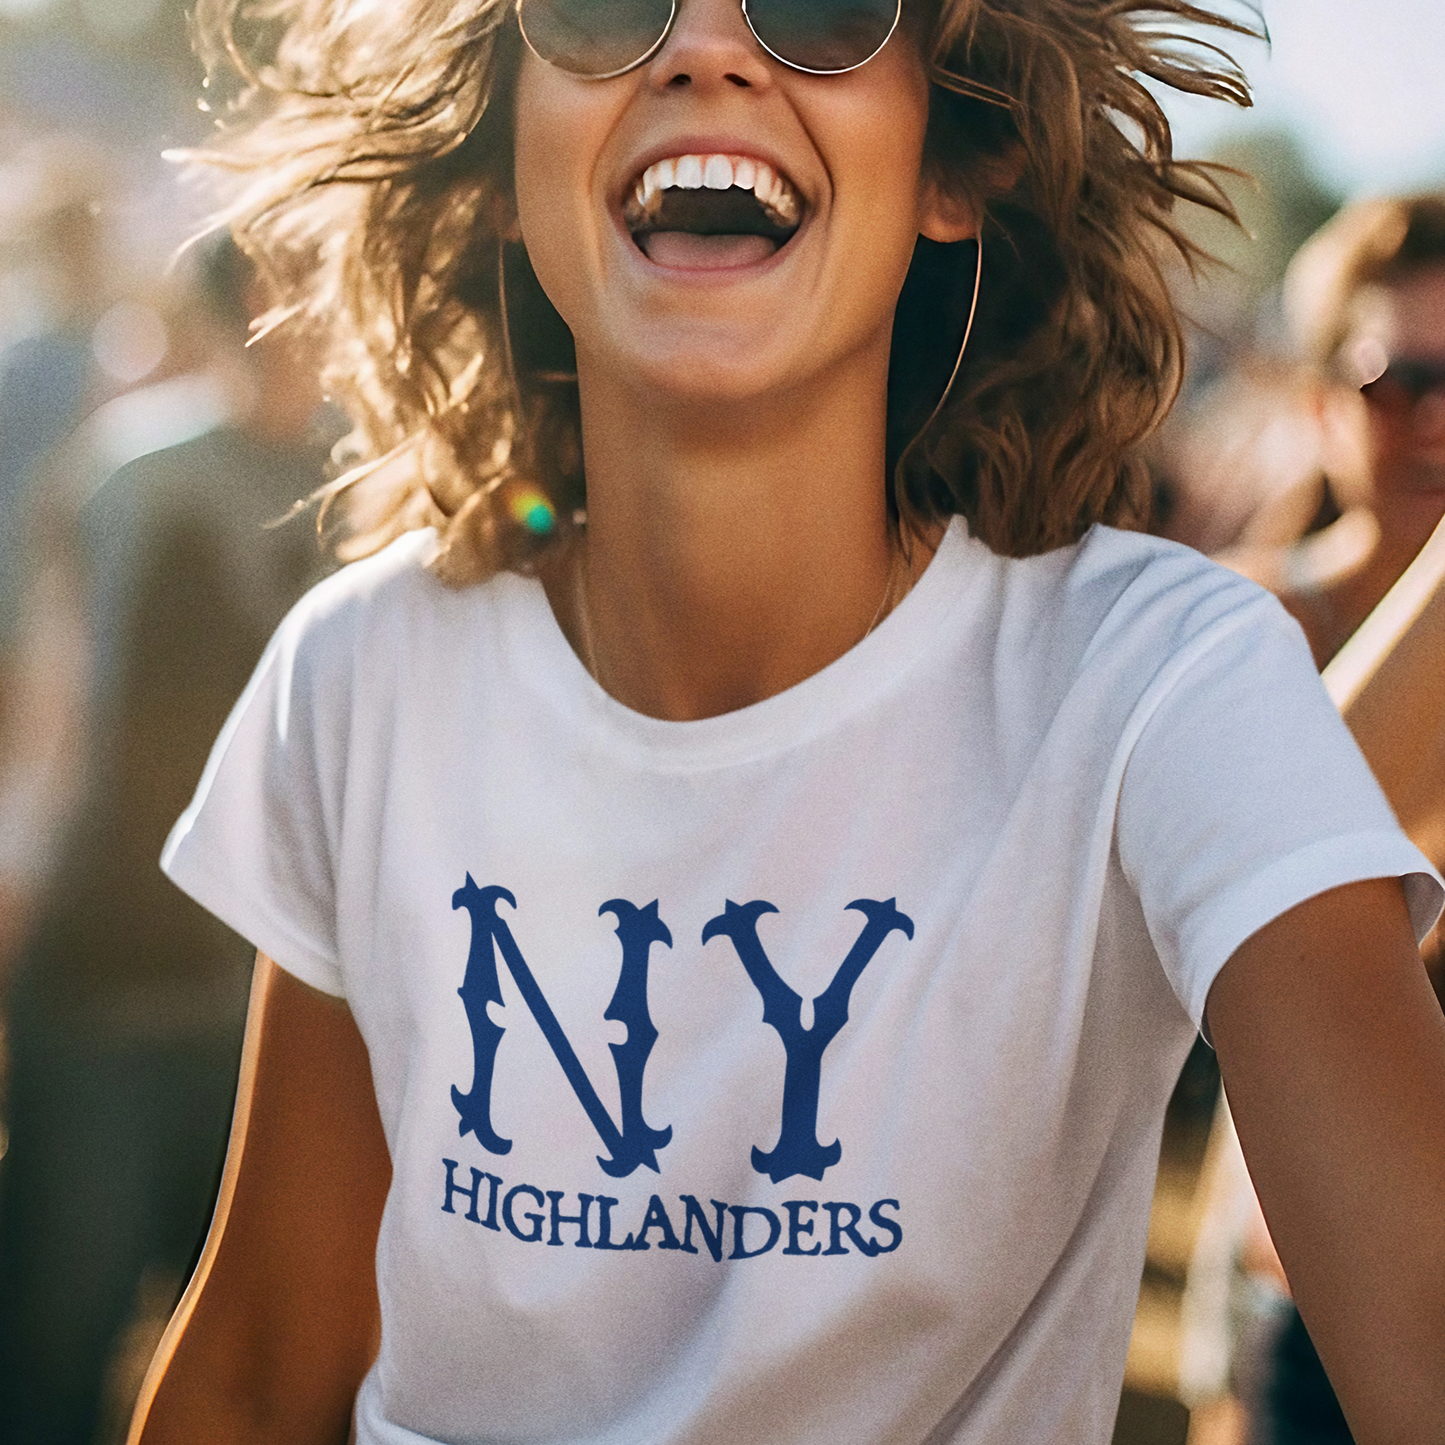 New York Highlanders baseball t-shirt